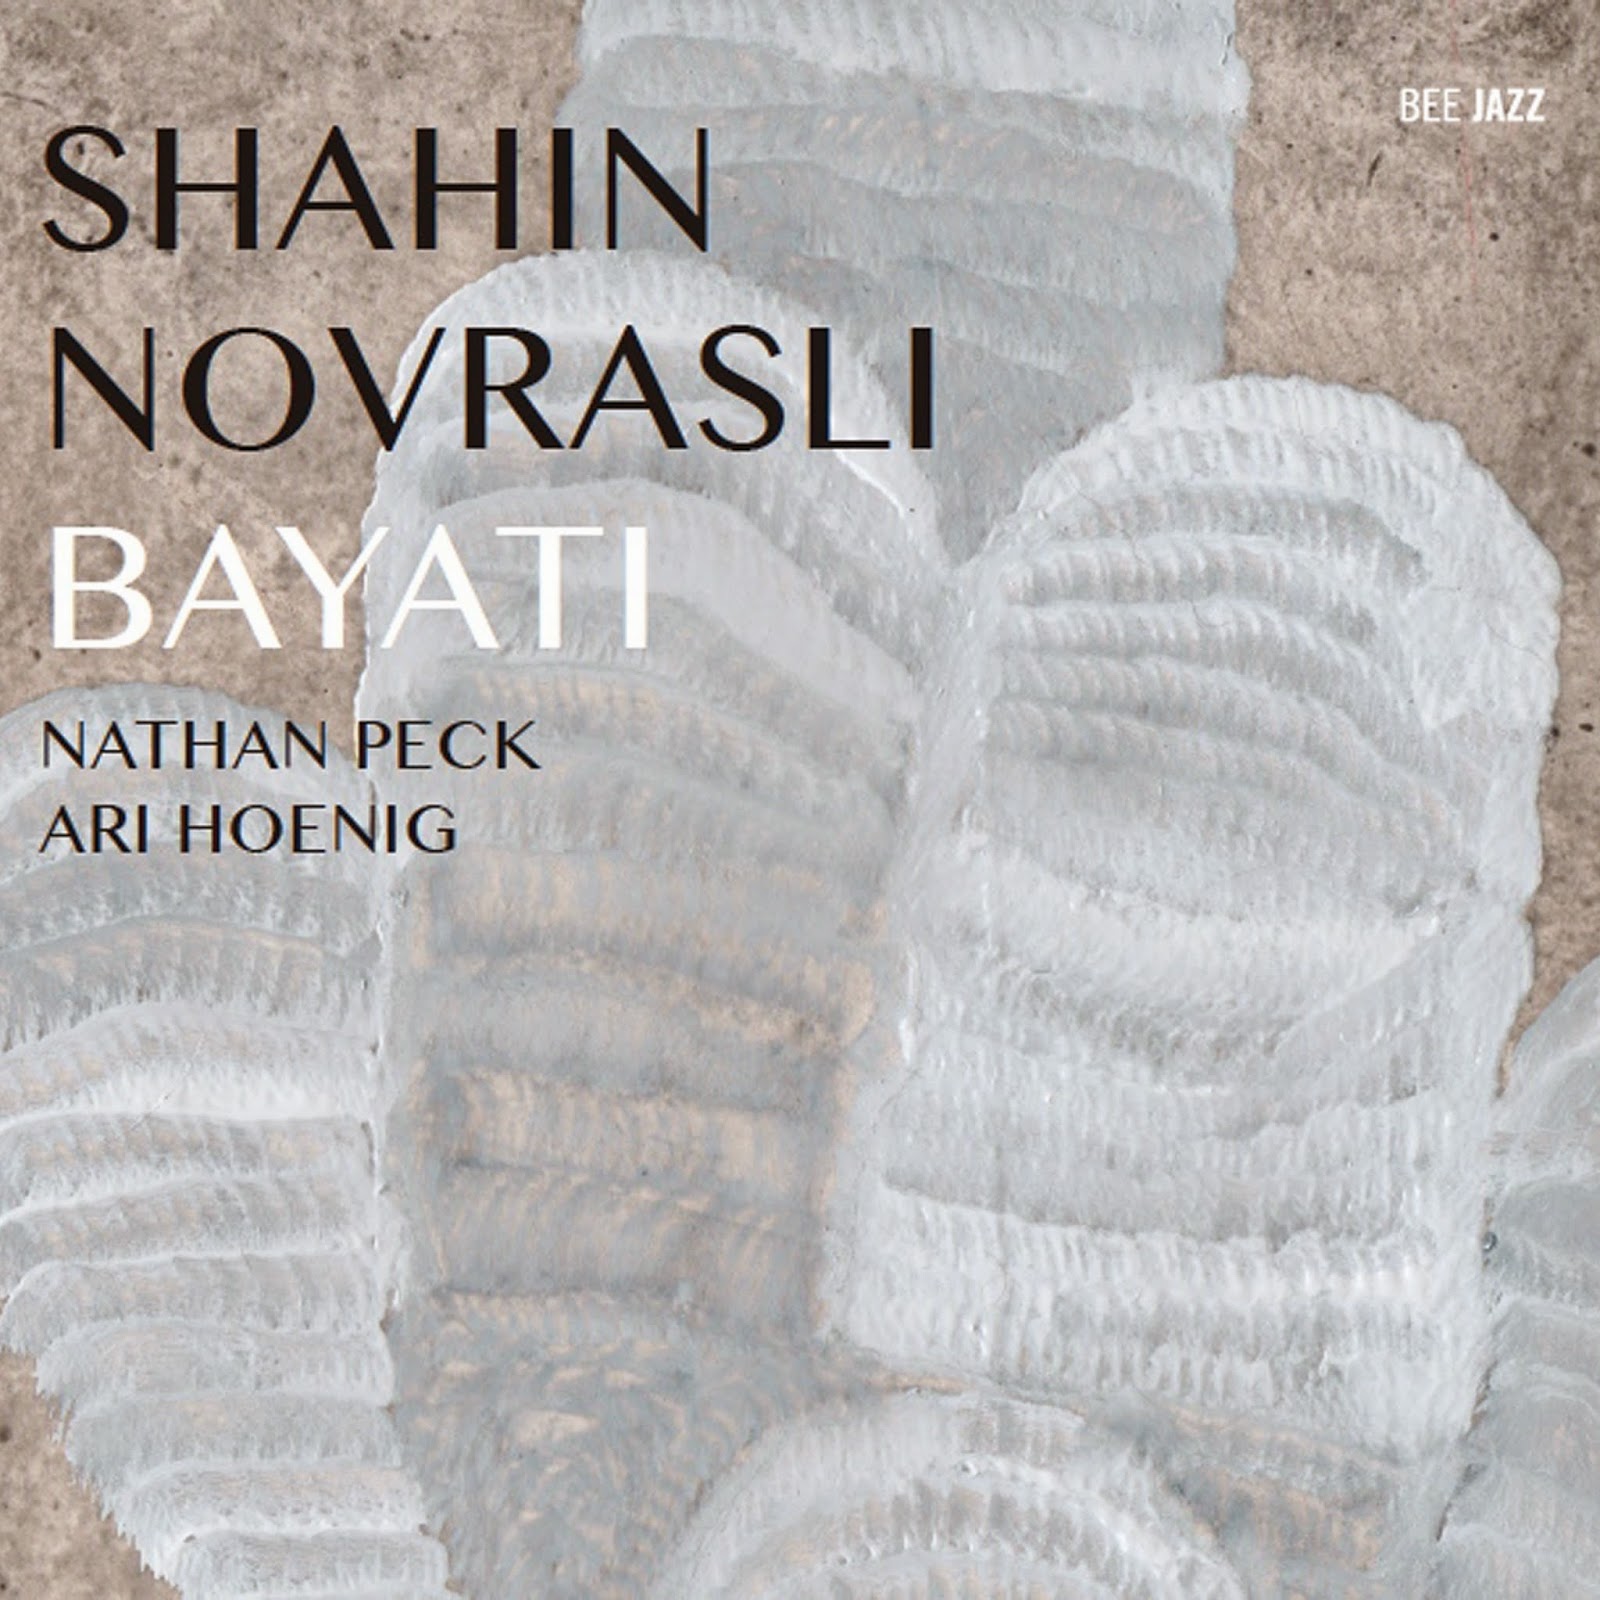 SHAHIN NOVRASLI - Bayati cover 